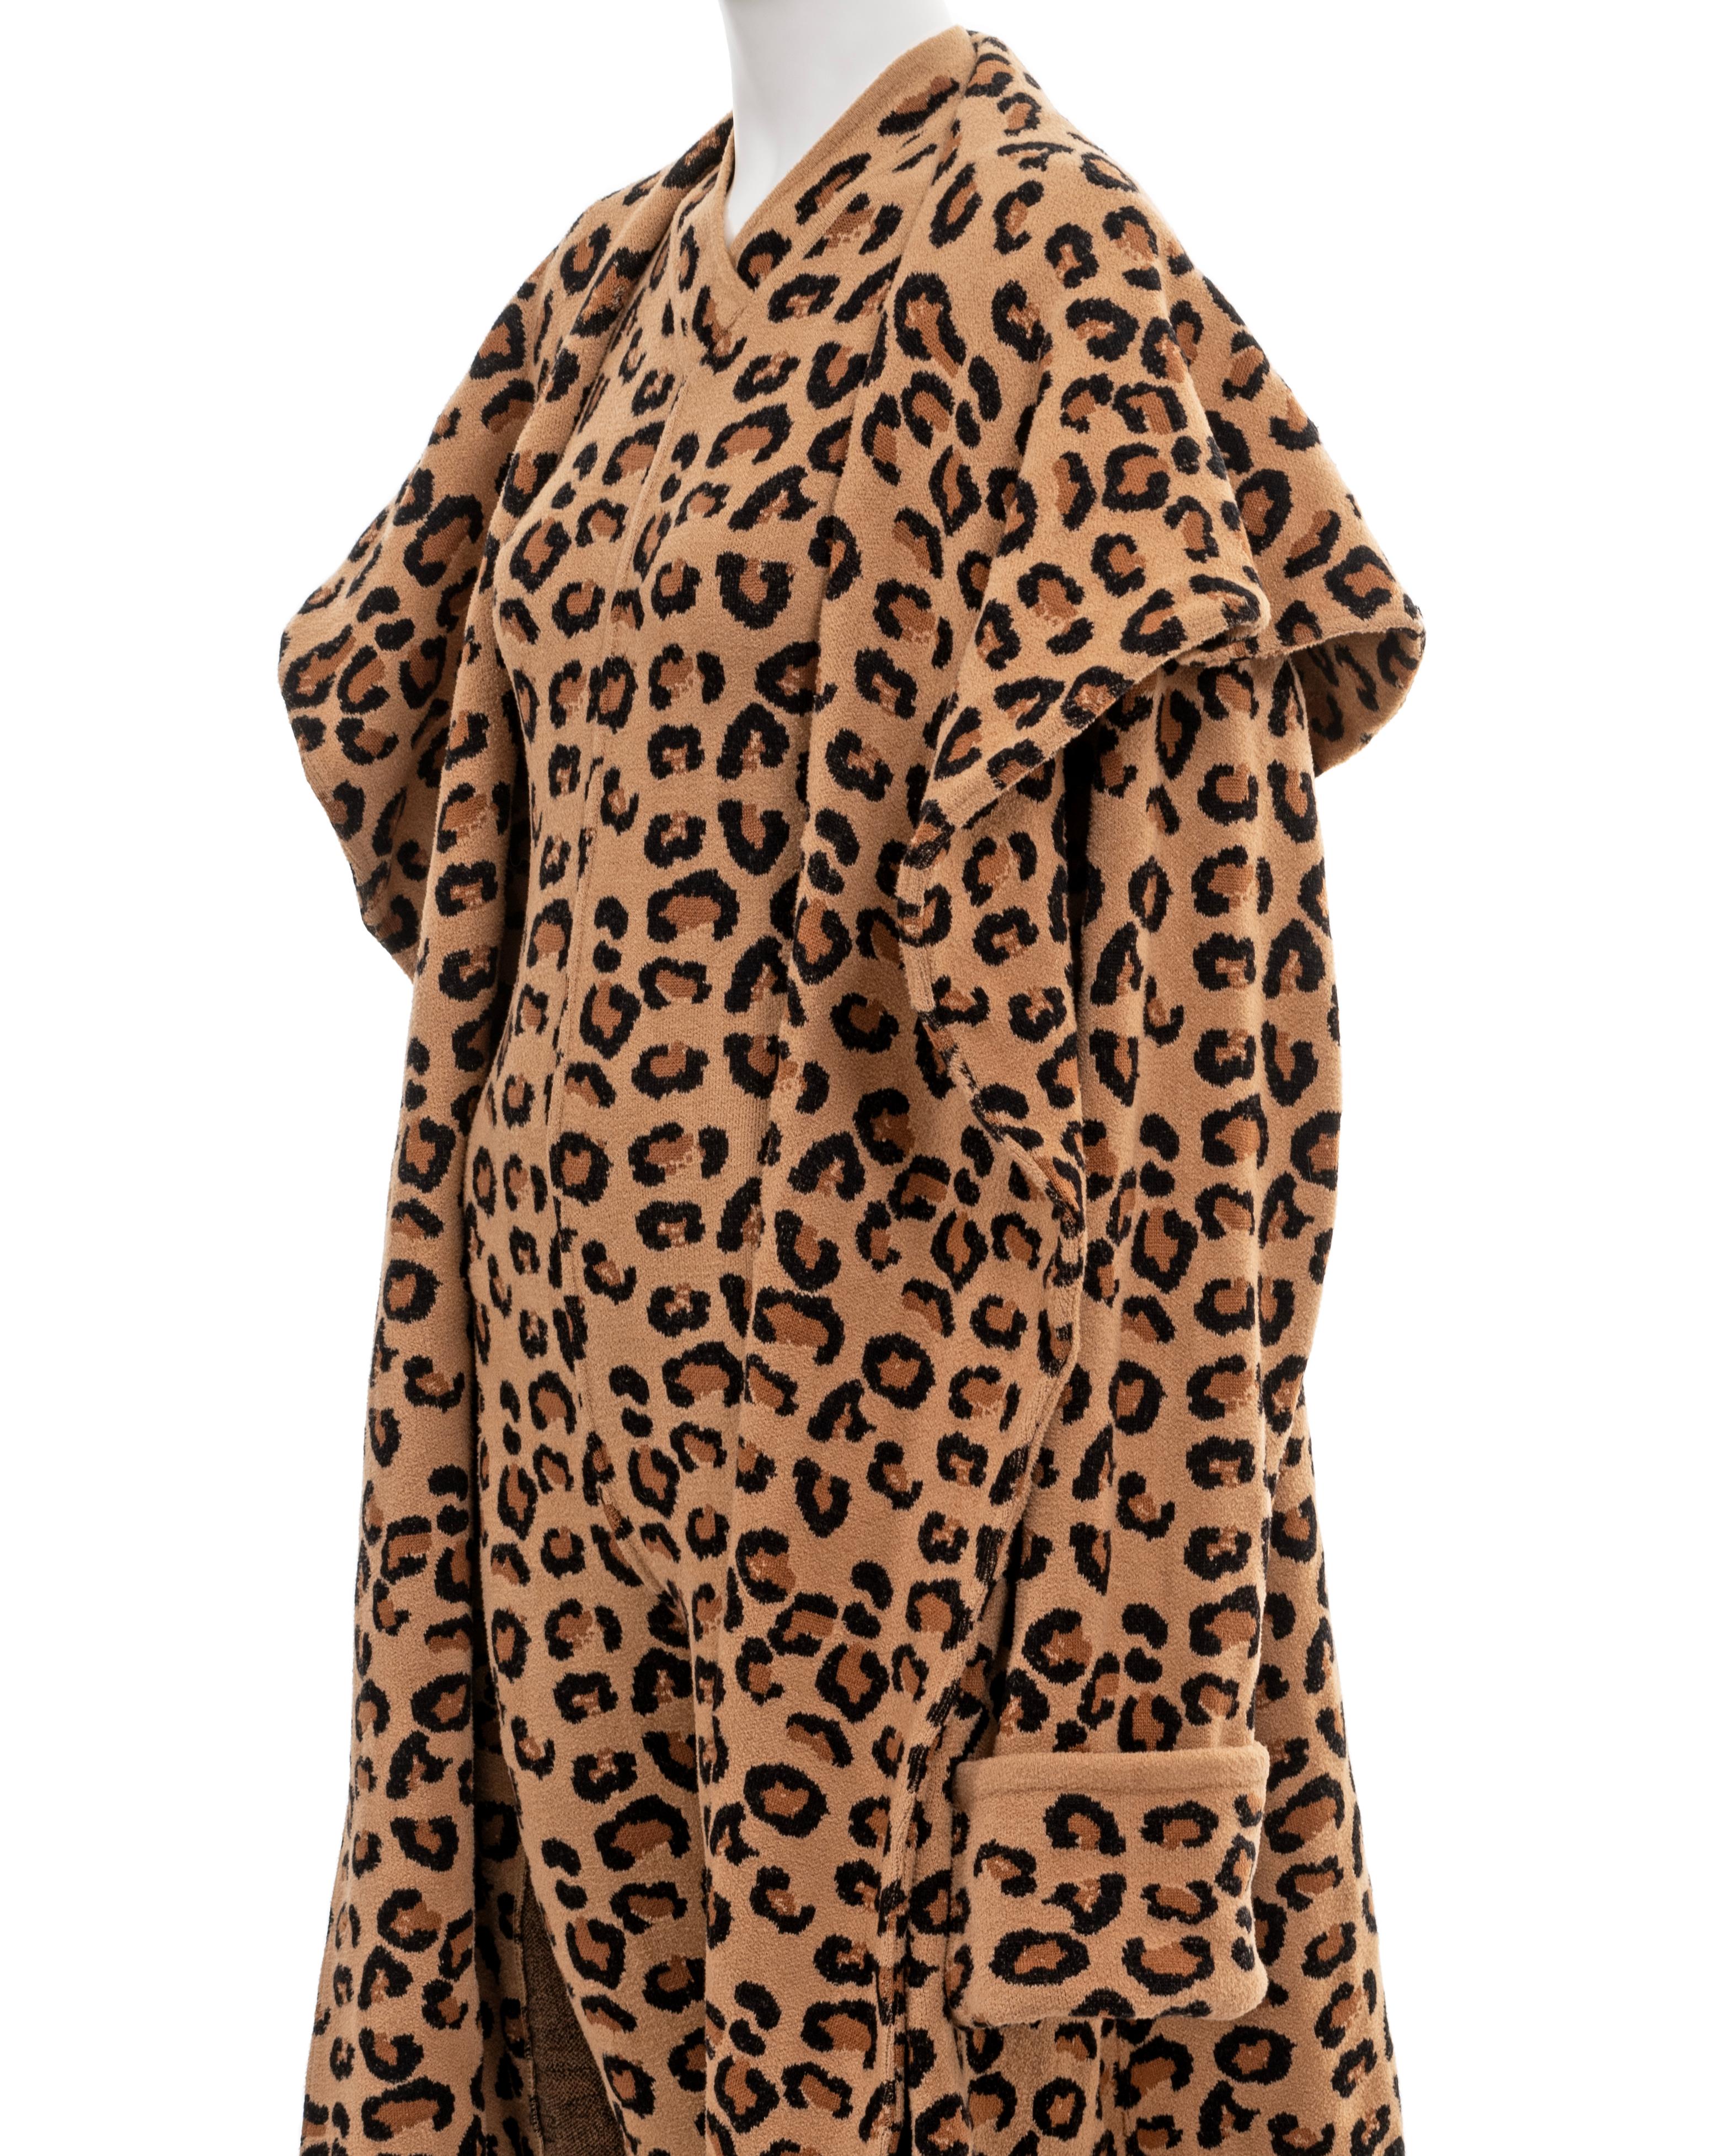 Azzedine Alaia leopard jacquard-knit catsuit and coat runway ensemble, fw 1991 14